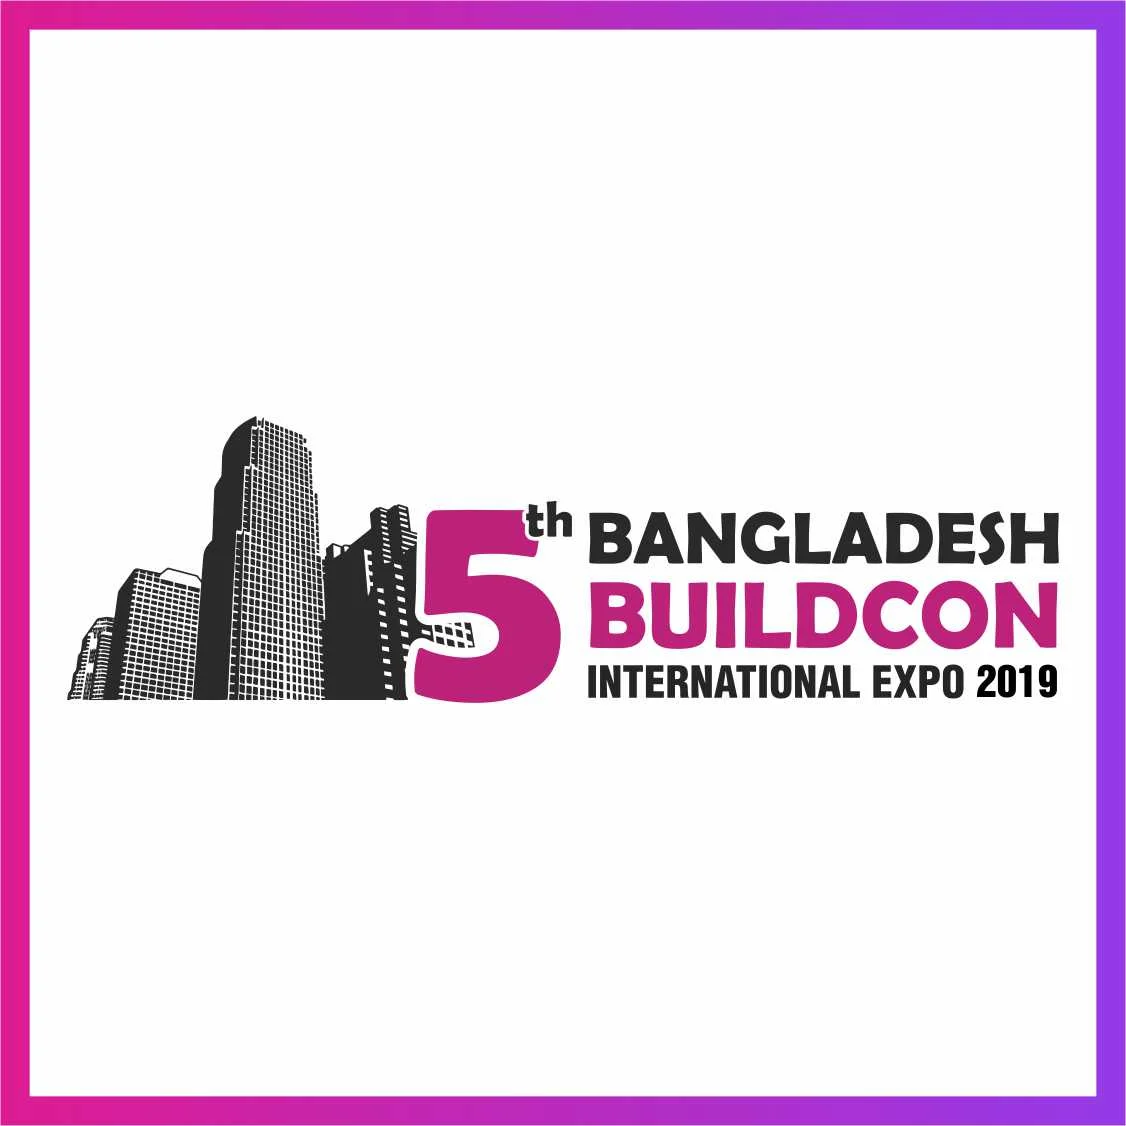 Bangladesh Buildcon International Expo 2019